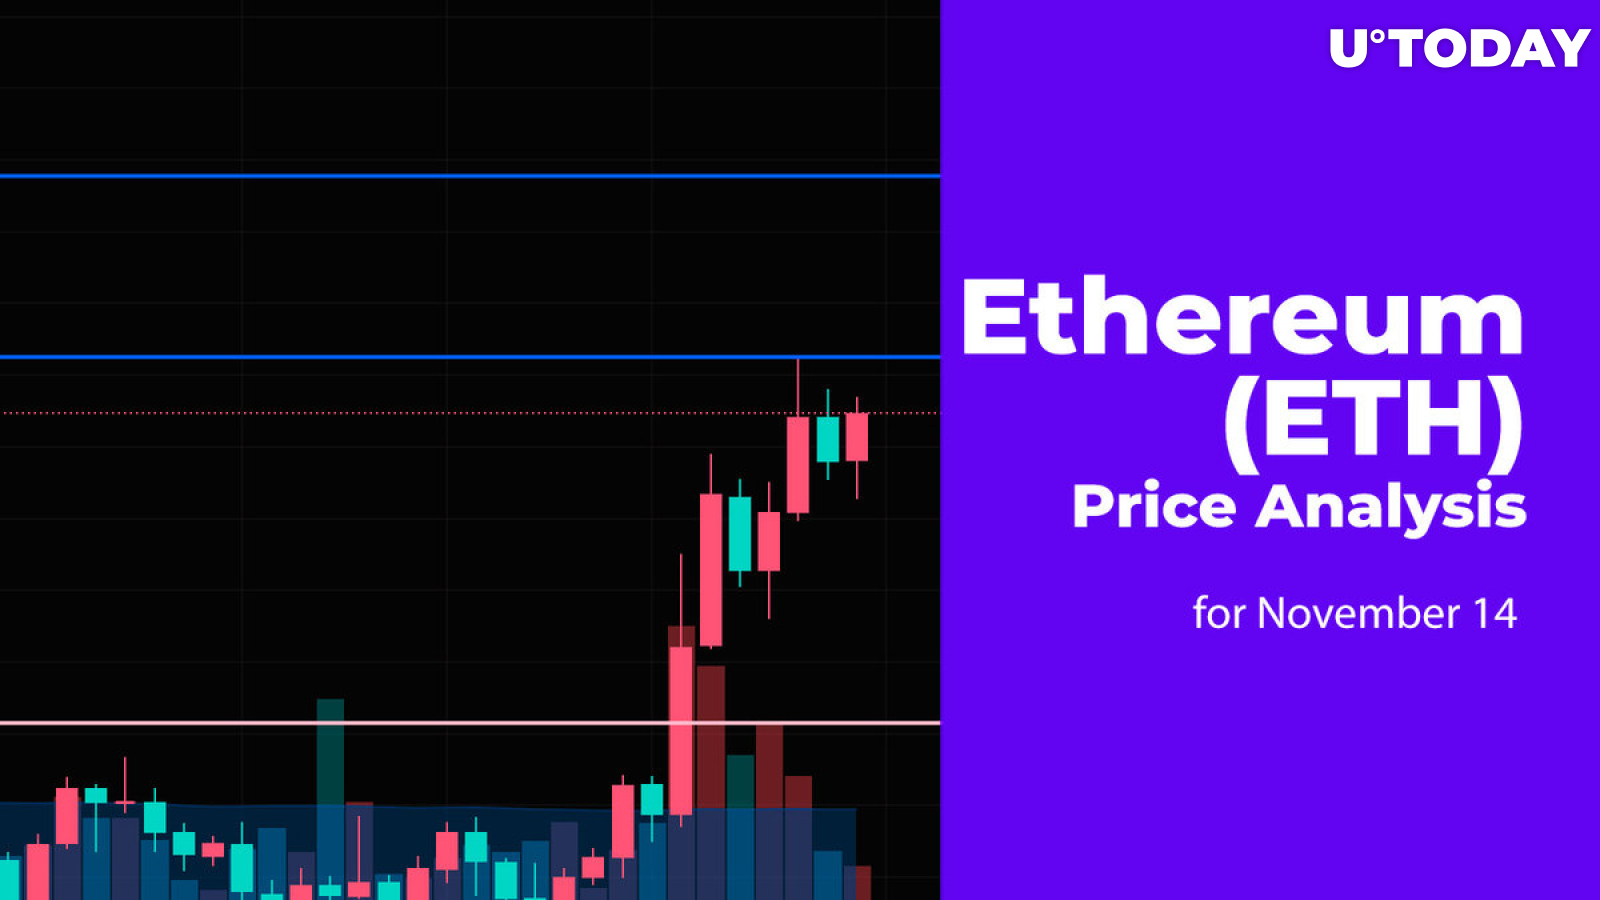 Ethereum (ETH) Price Analysis for November 14